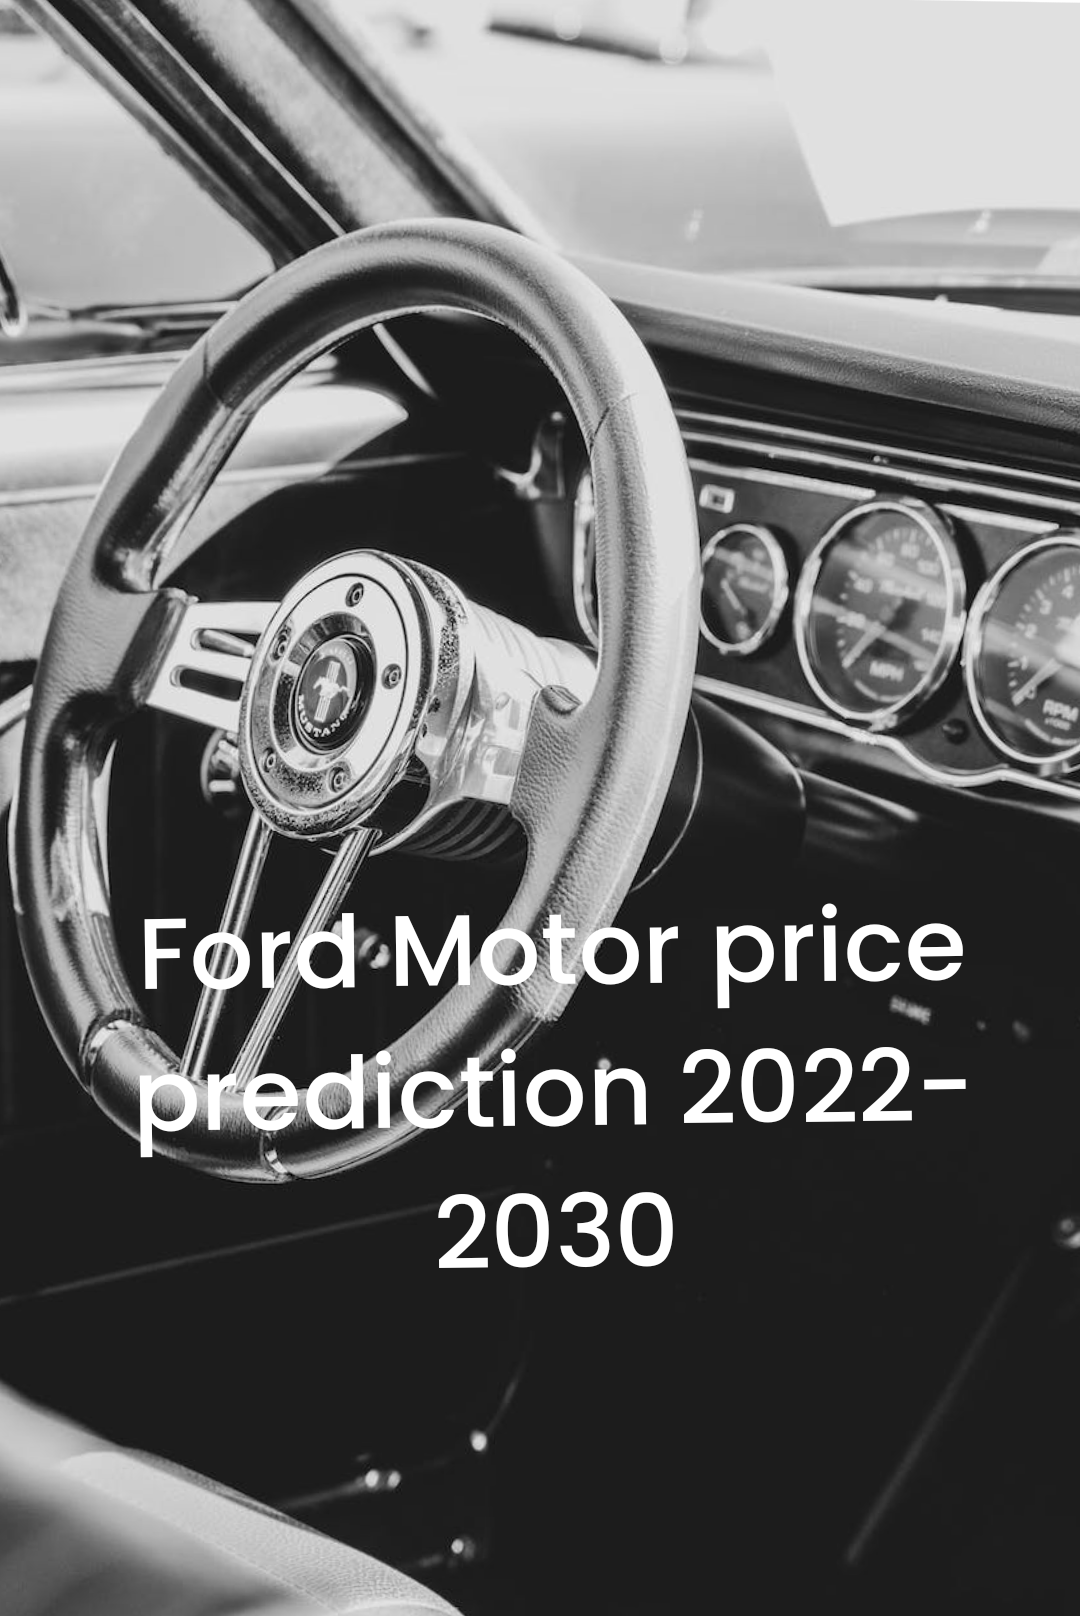 Ford Motors price prediction 2022-2030